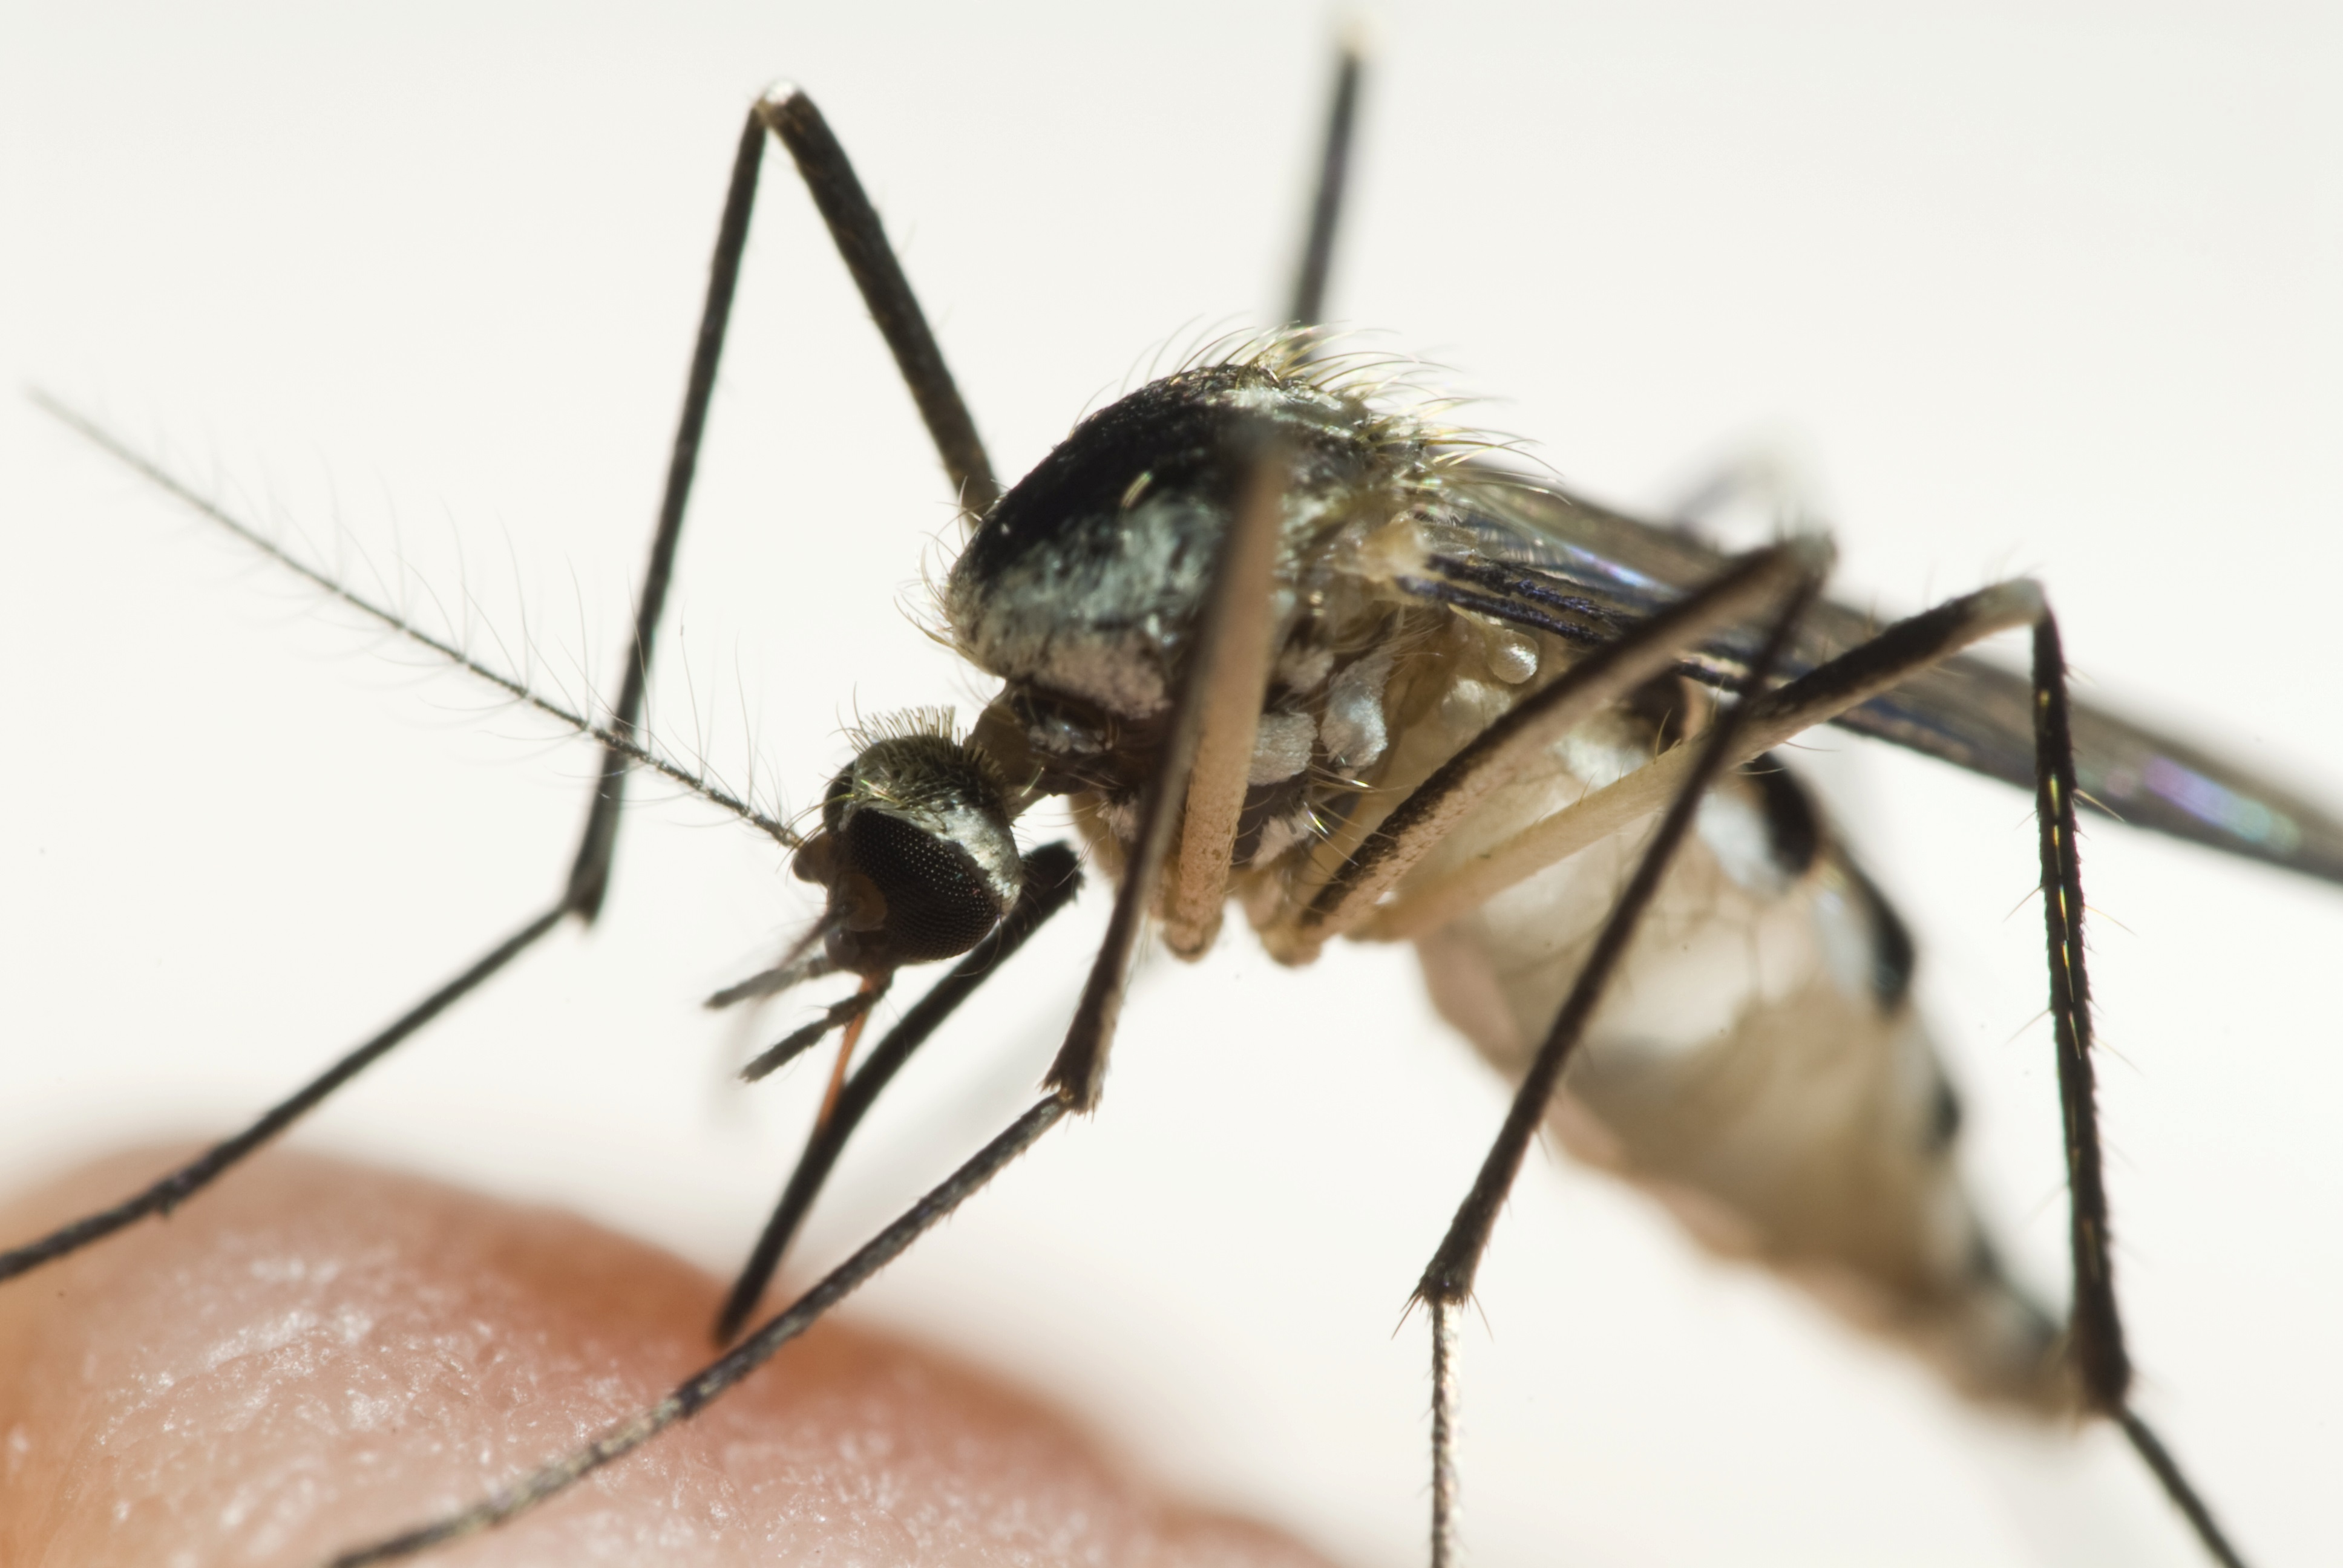 Extreme closeup of mosquito found prior to providing Mosquito Control in Encinitas